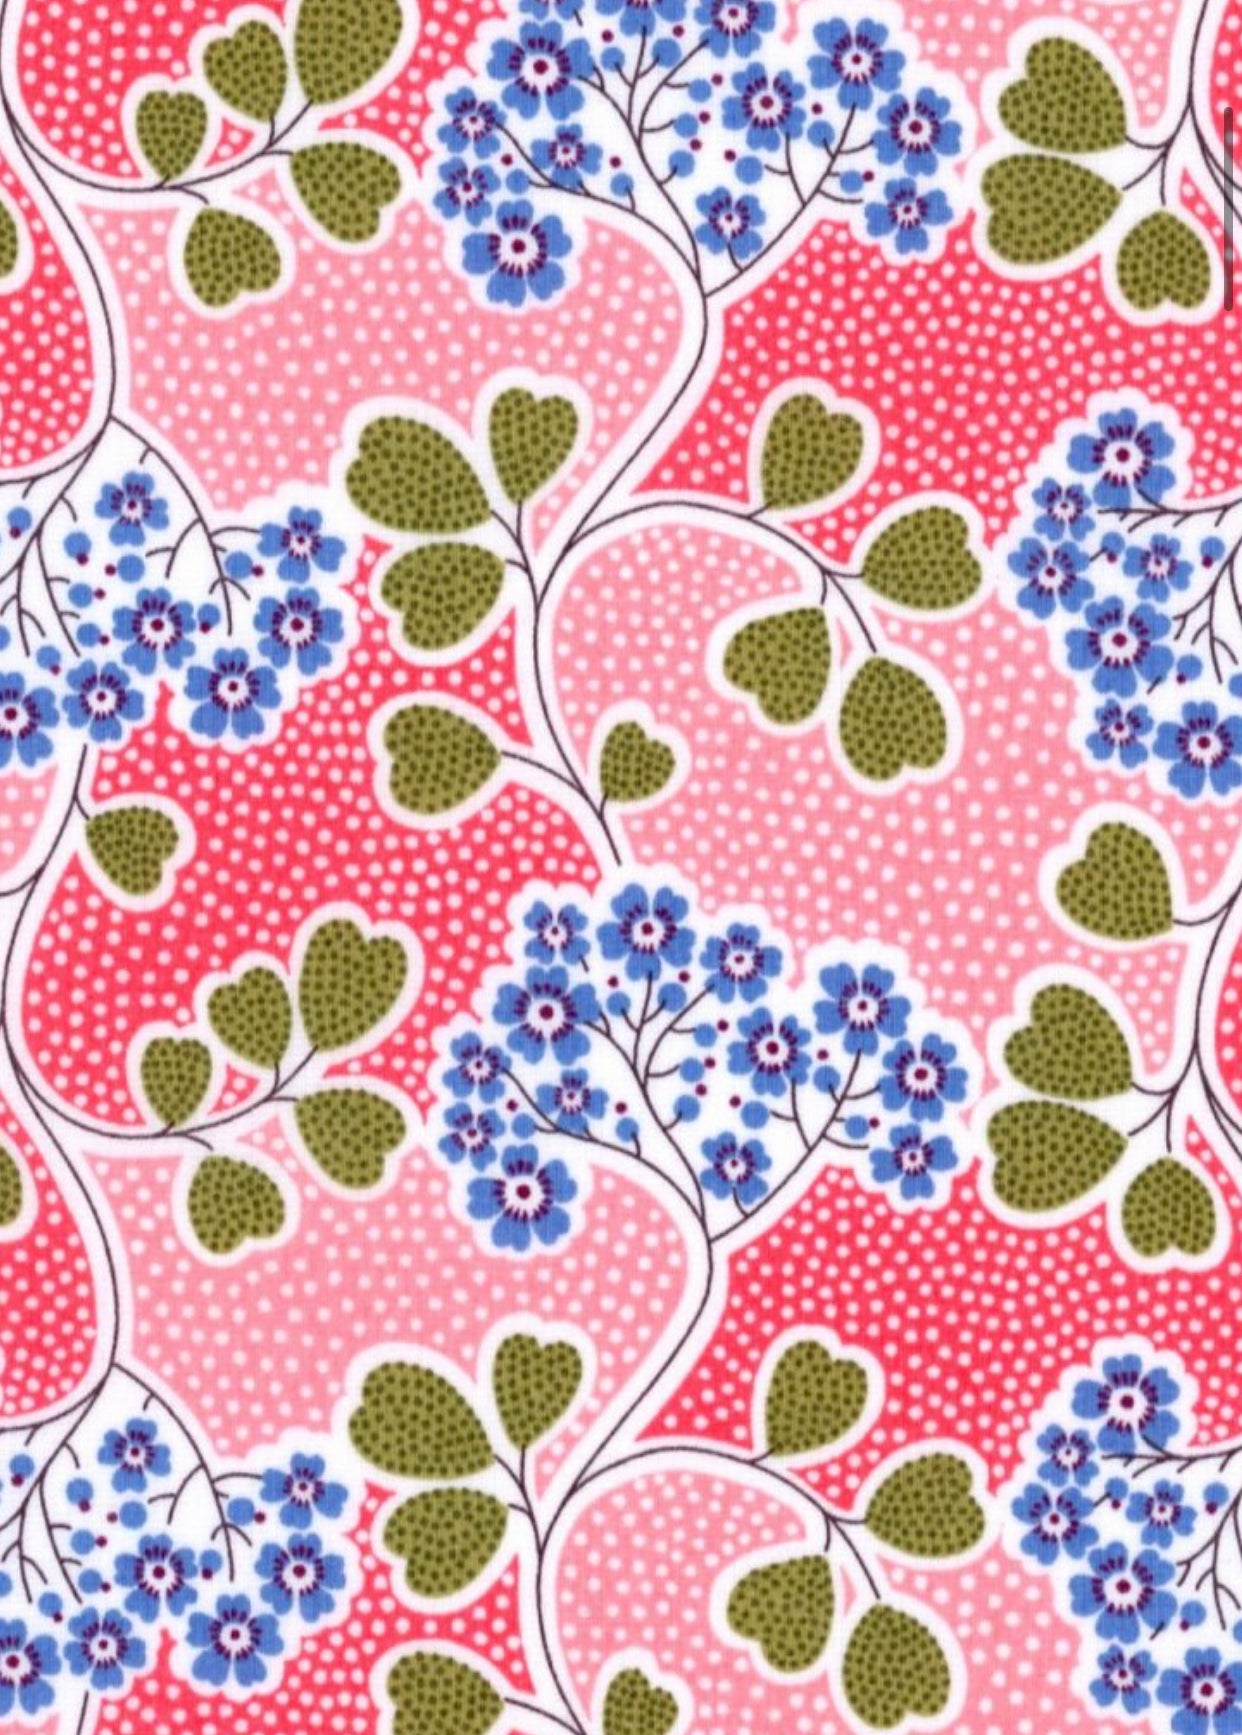 Liberty Fabrics: Wonderful Fantastical/ Primula Point C